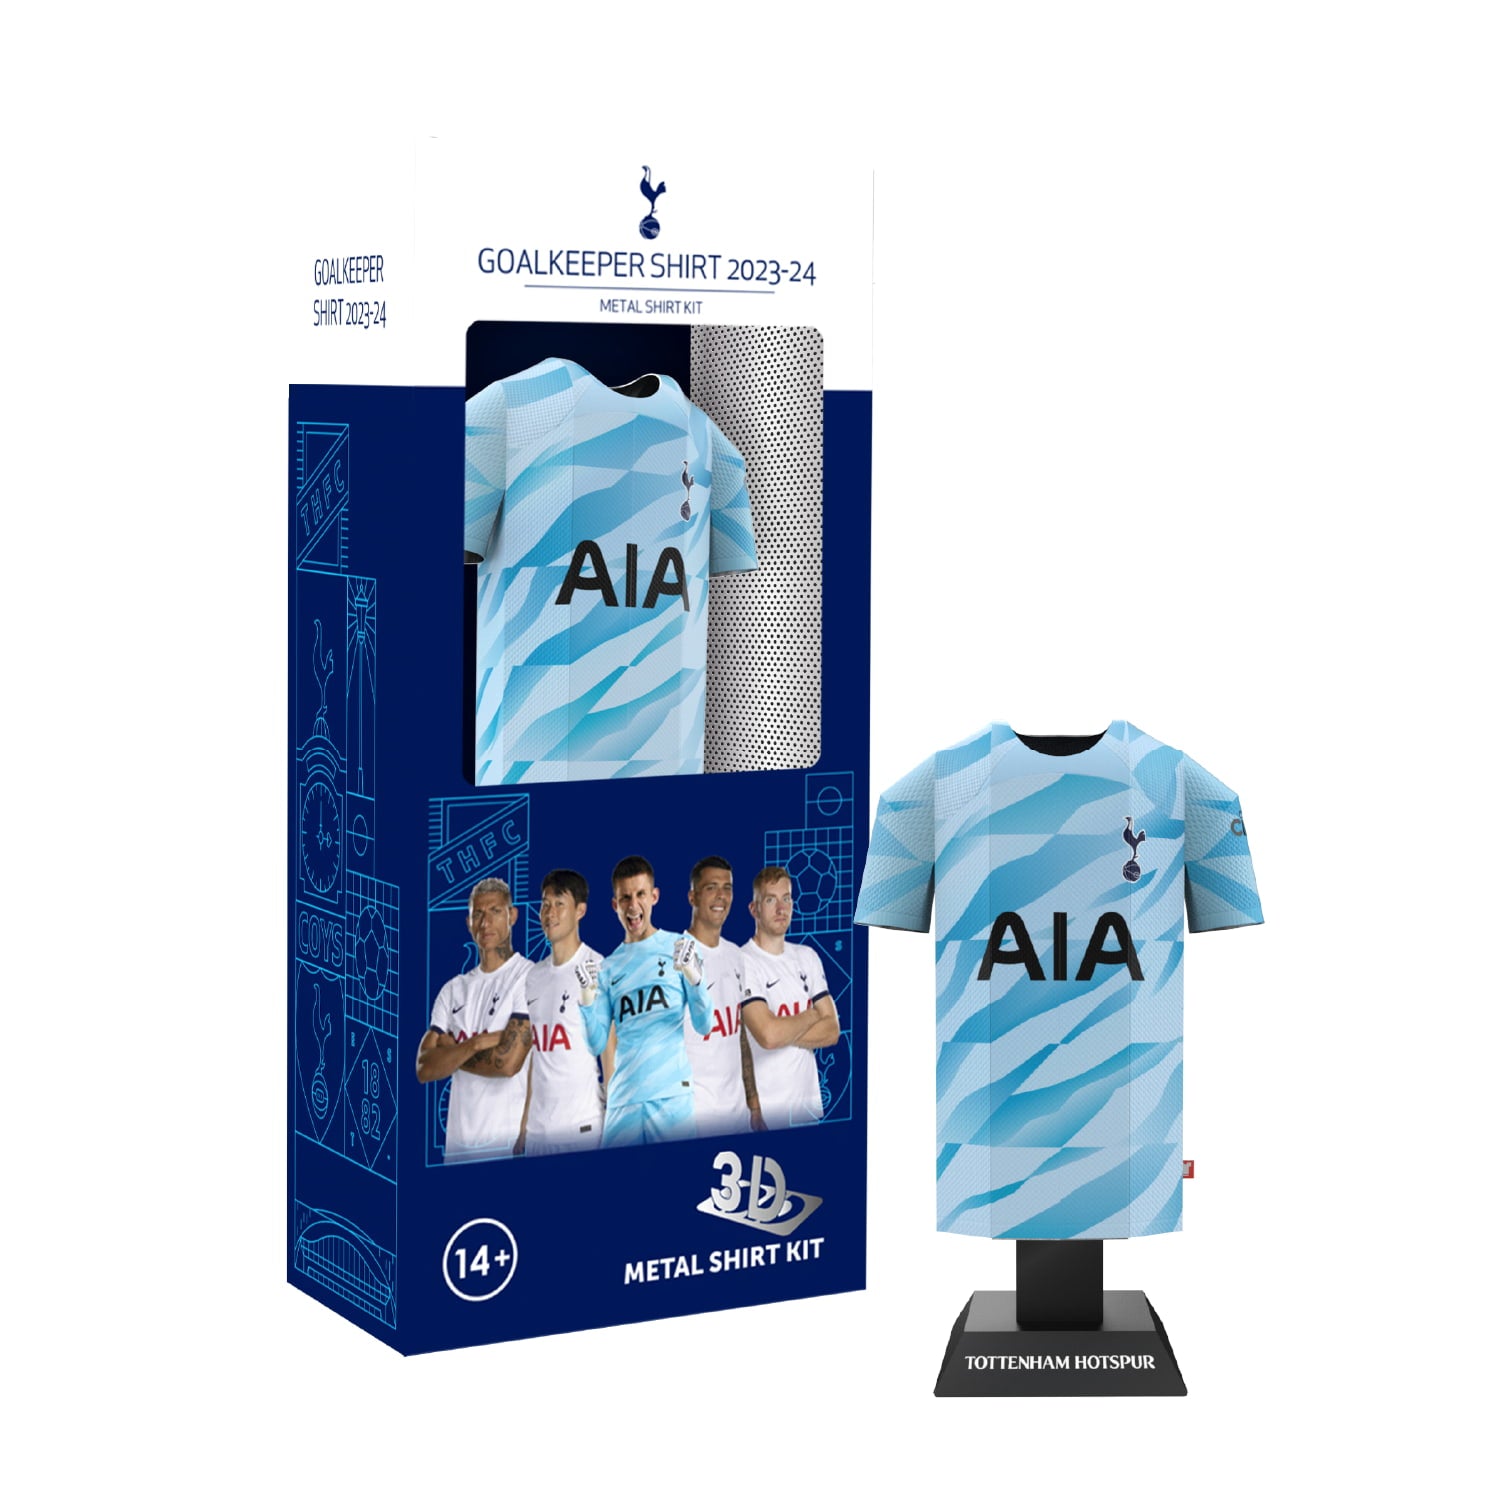 Tottenham goalkeeper shirt in locker packaging